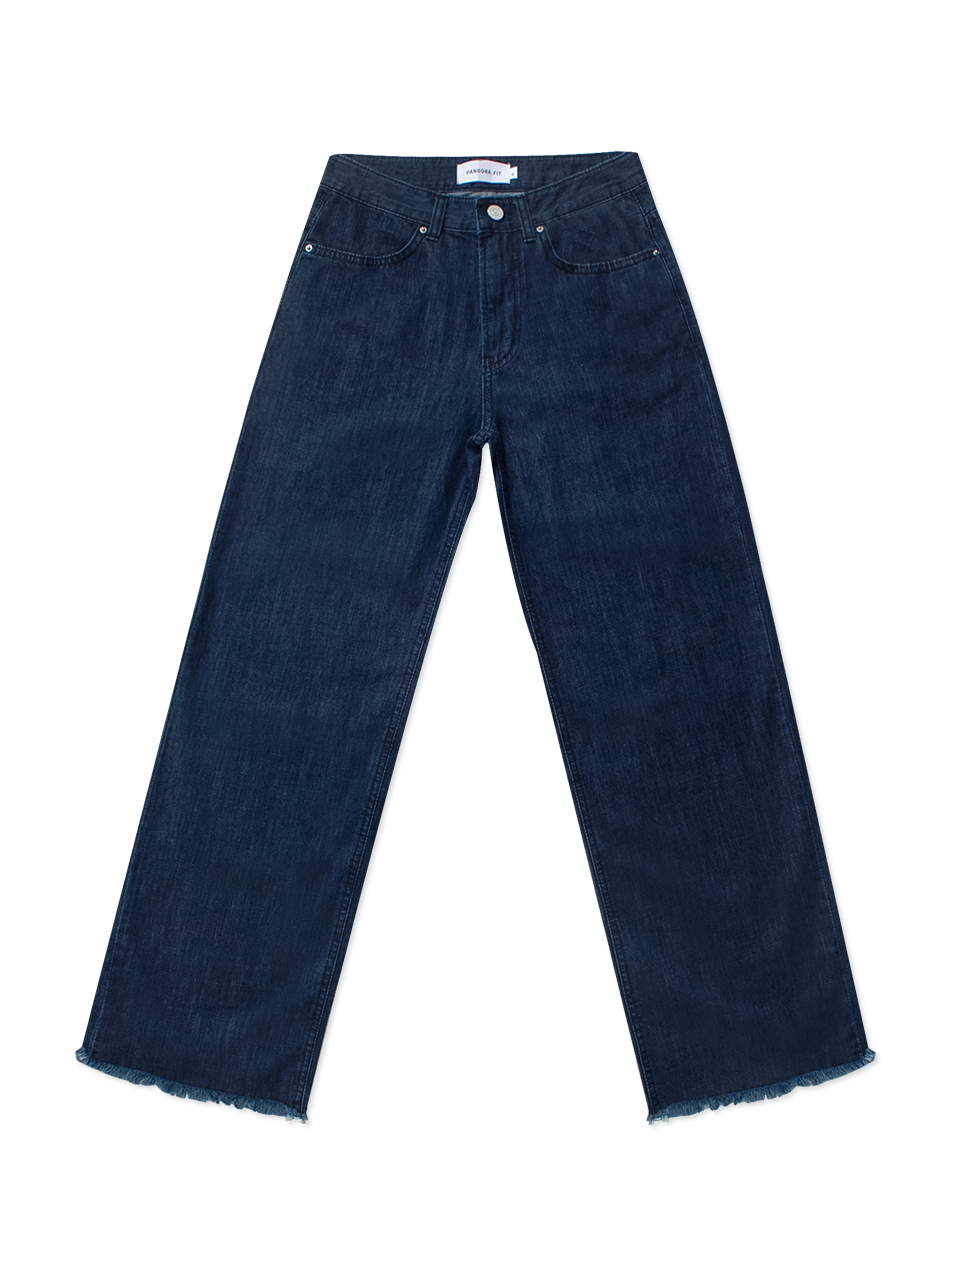 [WIDE] Mainz Jeans